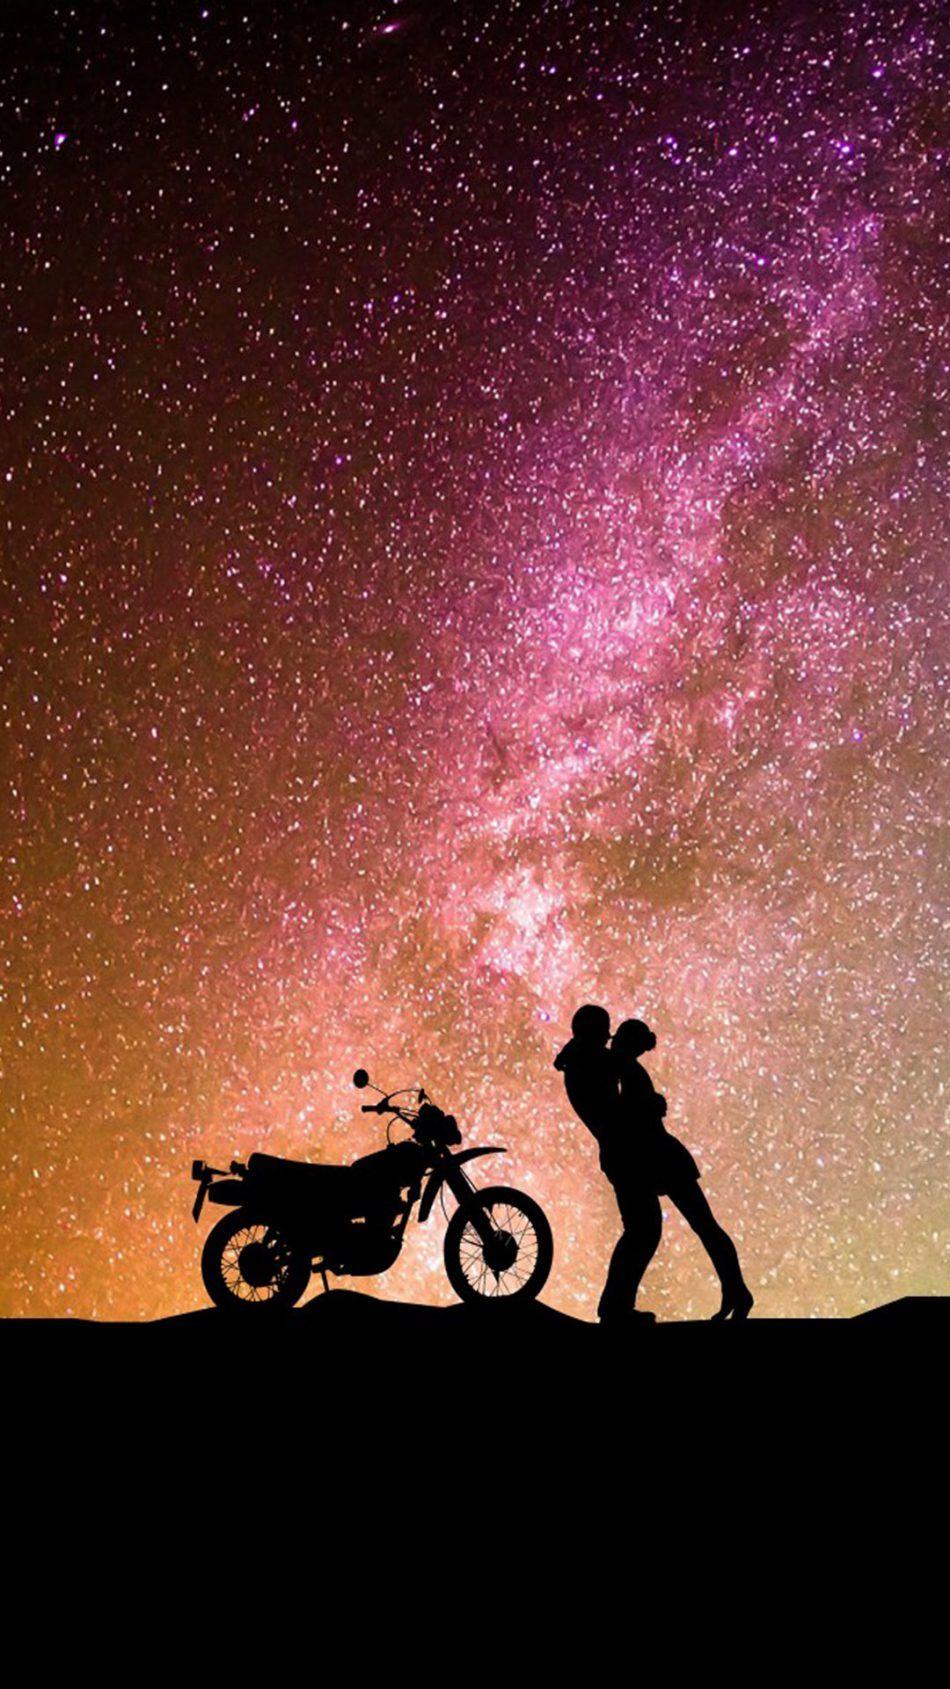 Couple Romantic Kiss Motorcycle. Romantic kiss